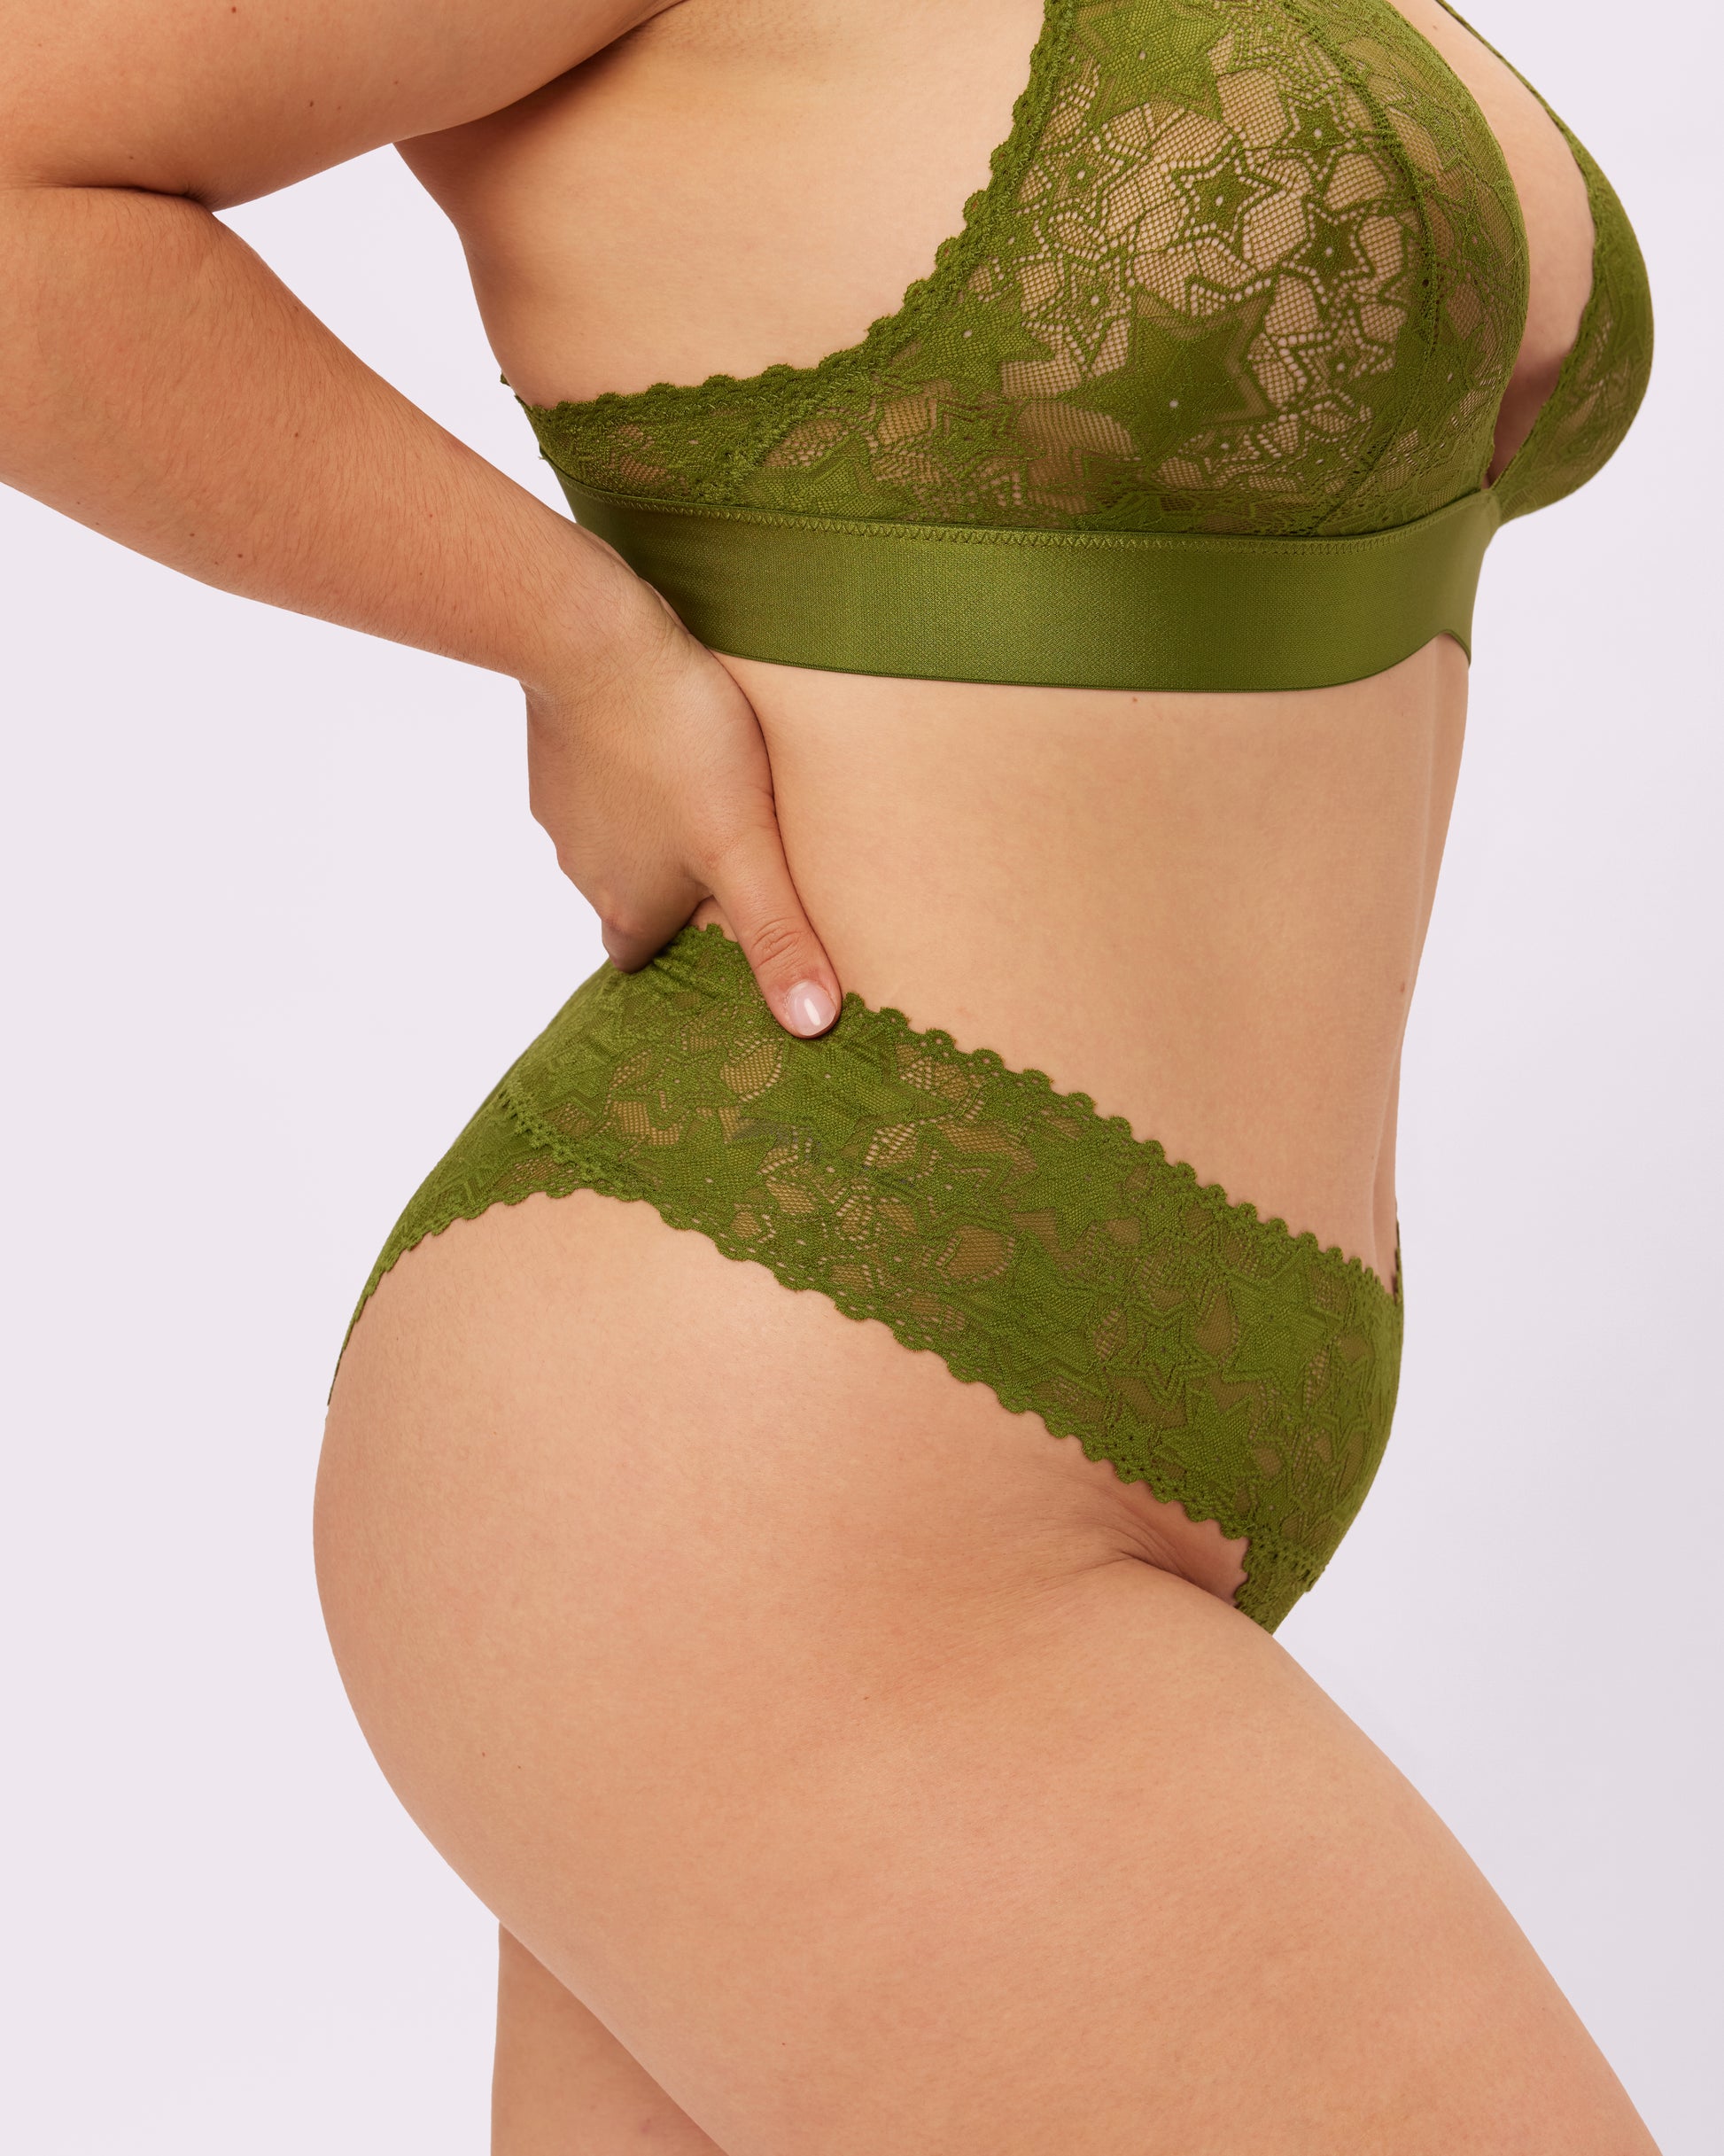 Lace BOYSHORT Sexy Panties XS, S, M, & L Underwear OLIVE GREEN No